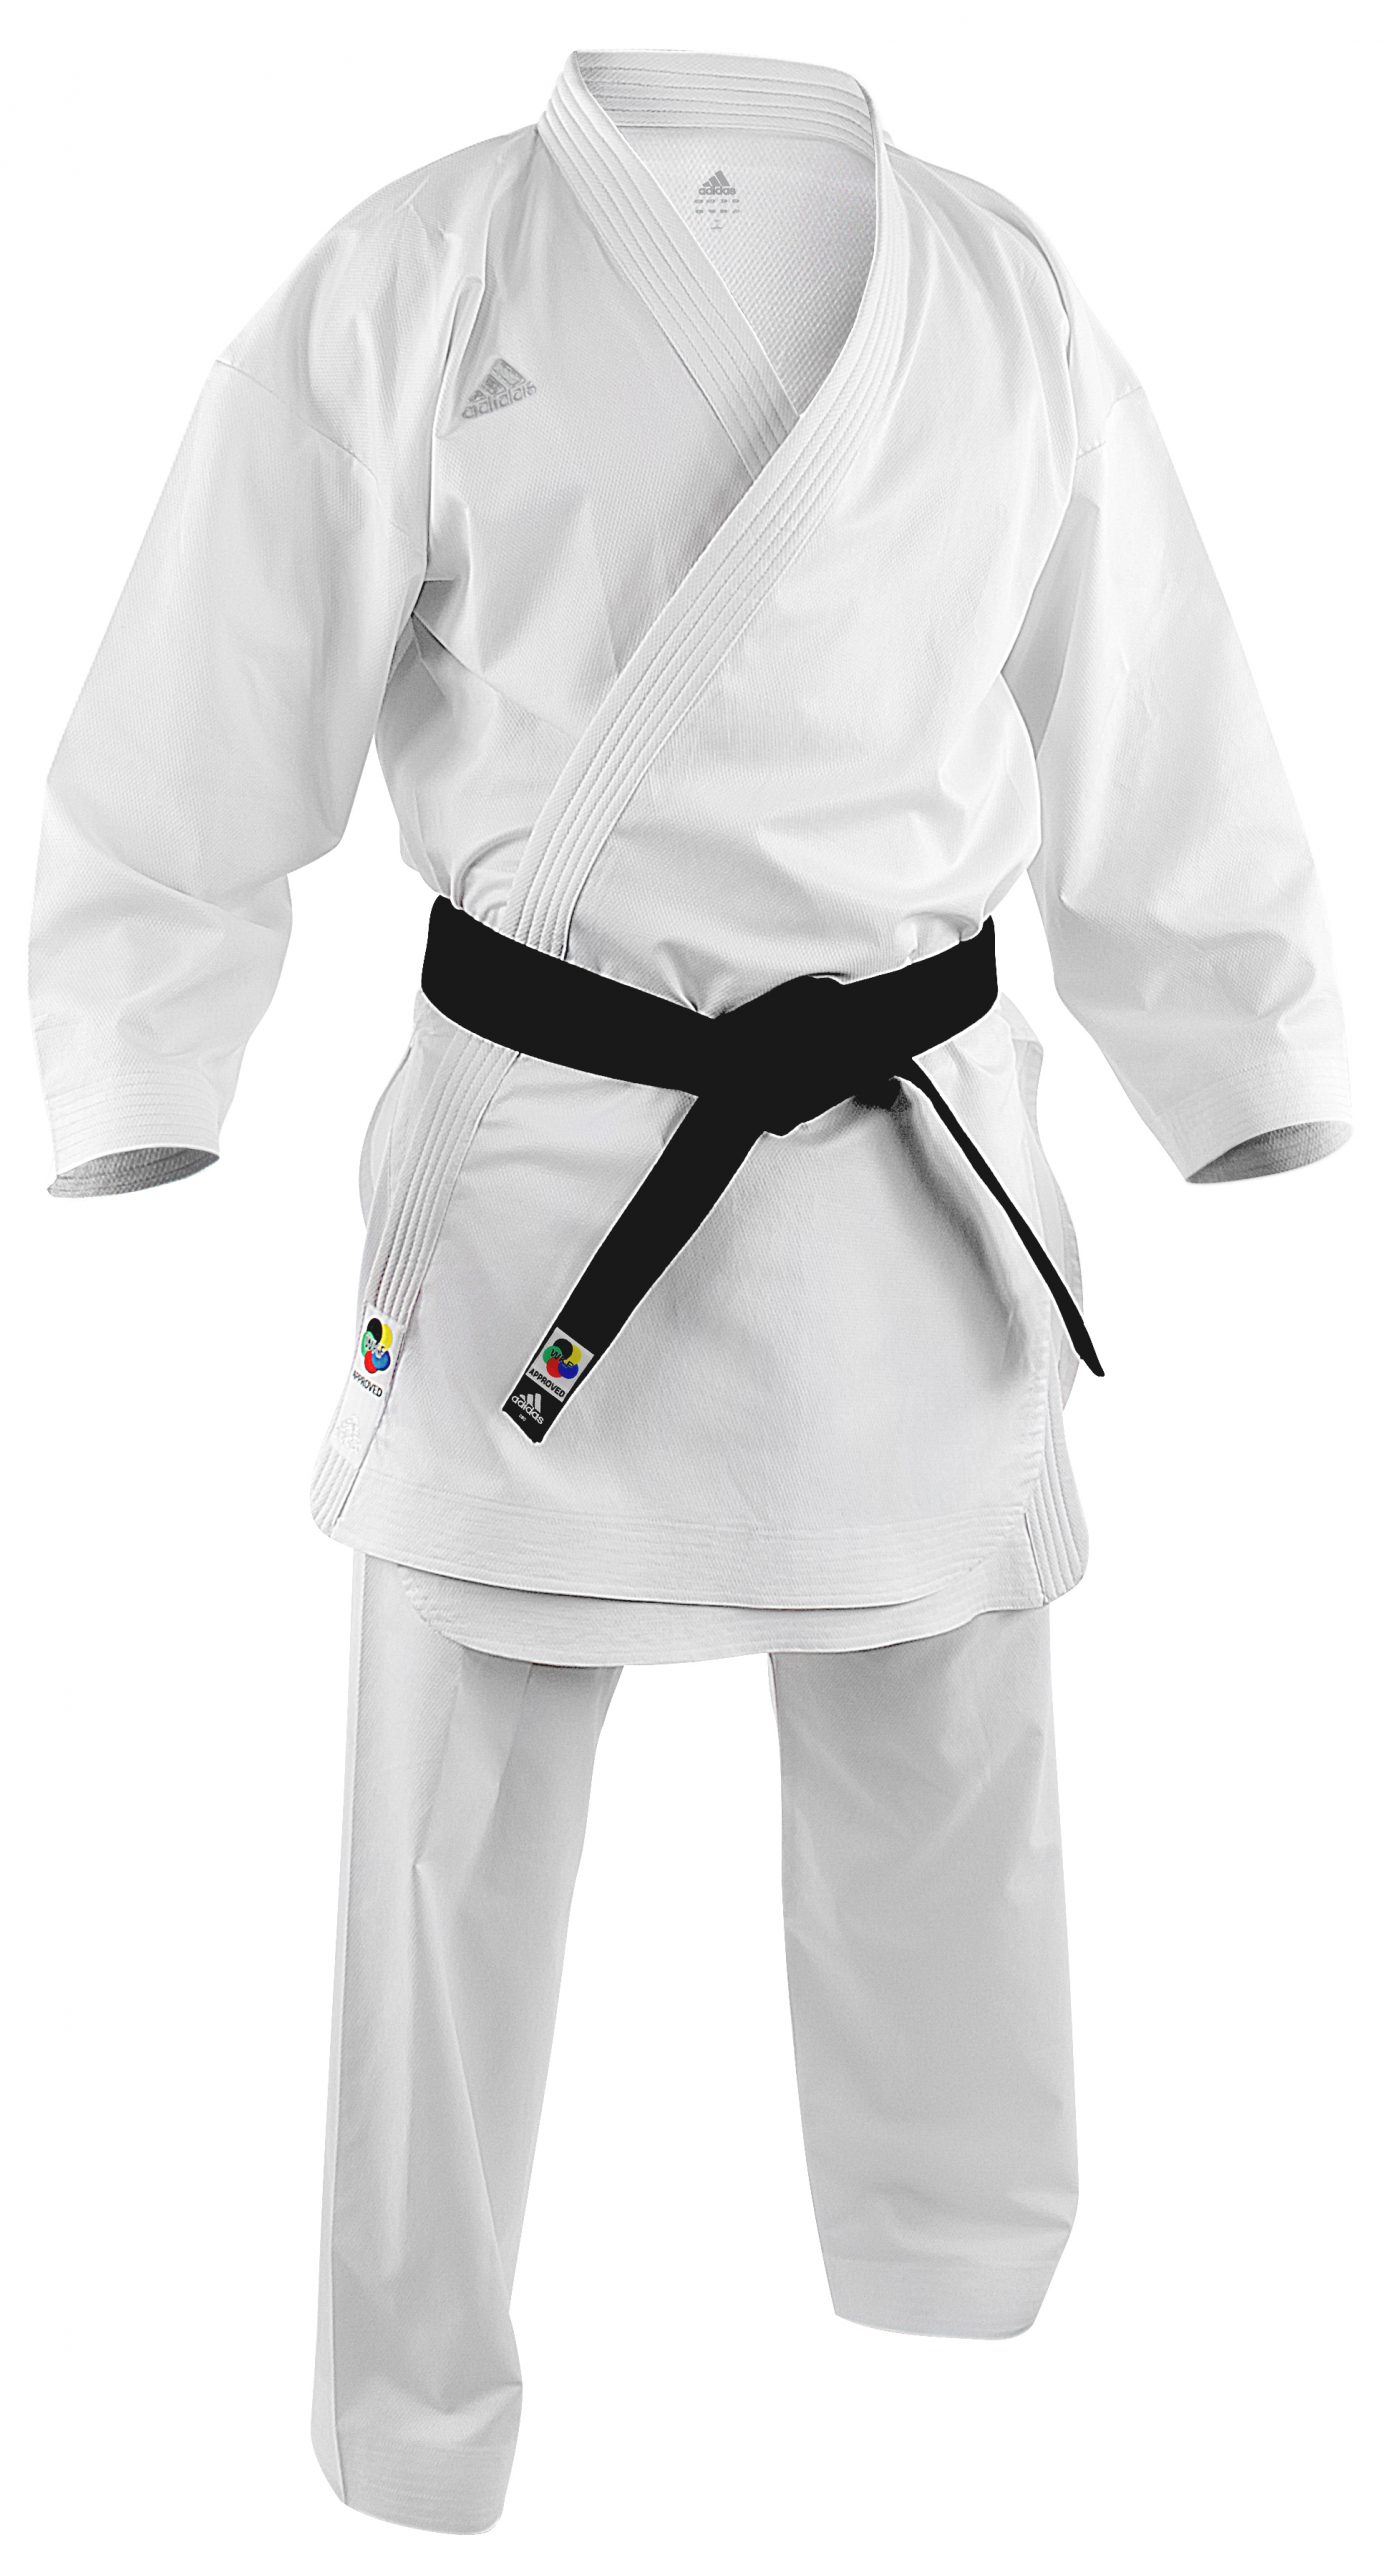 Karategi Adidas ADIZERO - Indumentaria para marciales